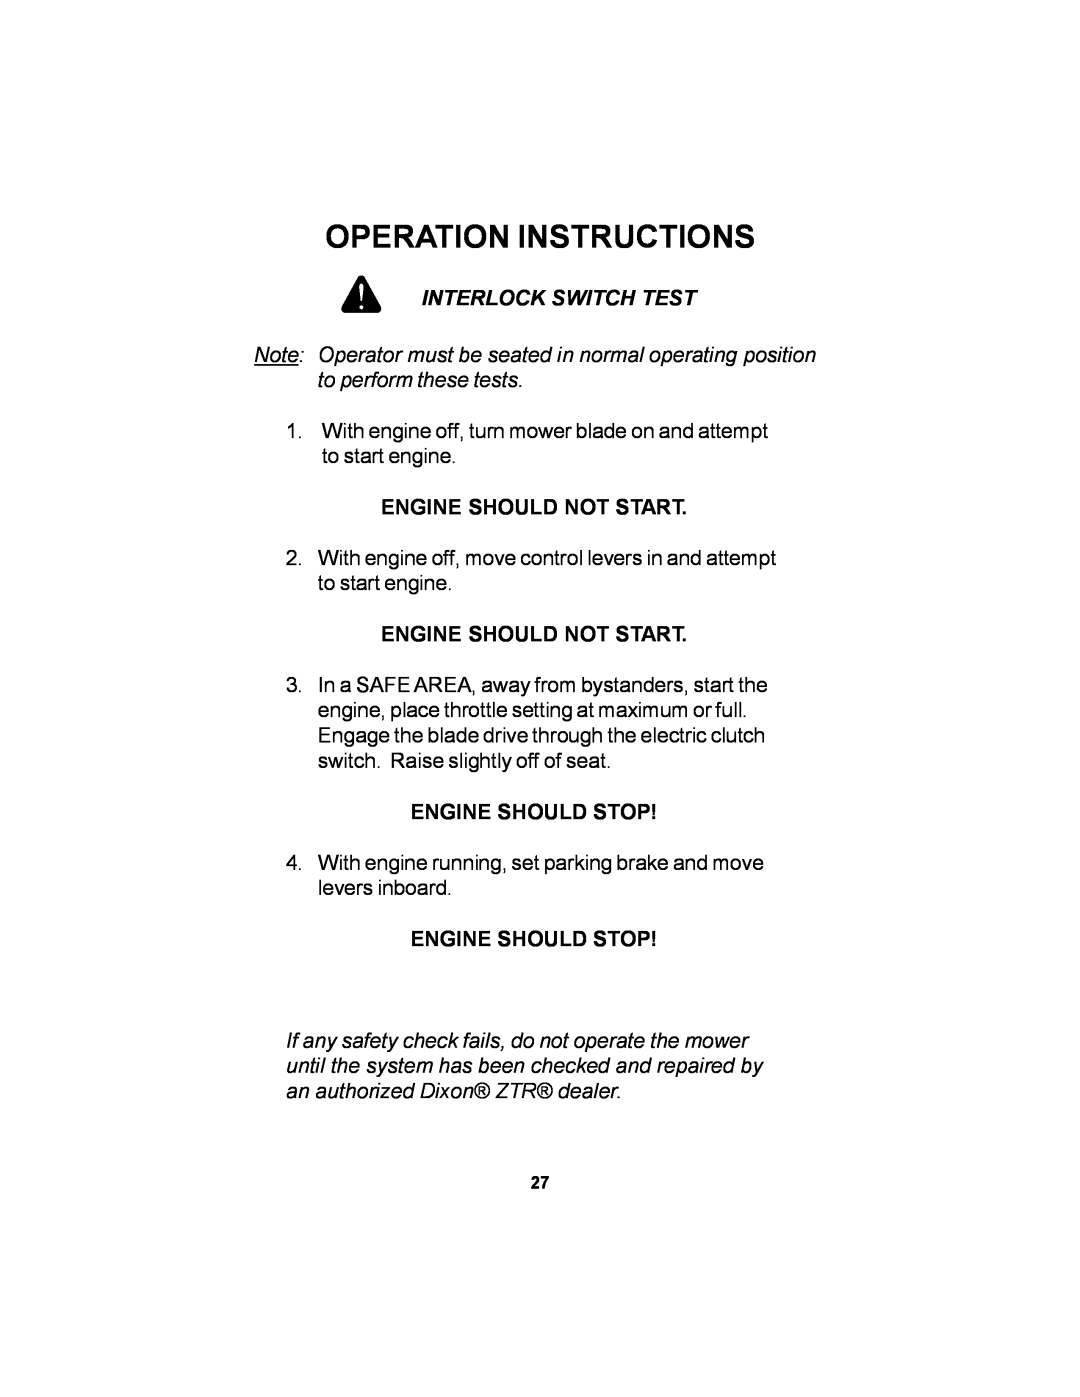 Dixon 12881-106 manual Operation Instructions, Engine Should Not Start, Engine Should Stop 